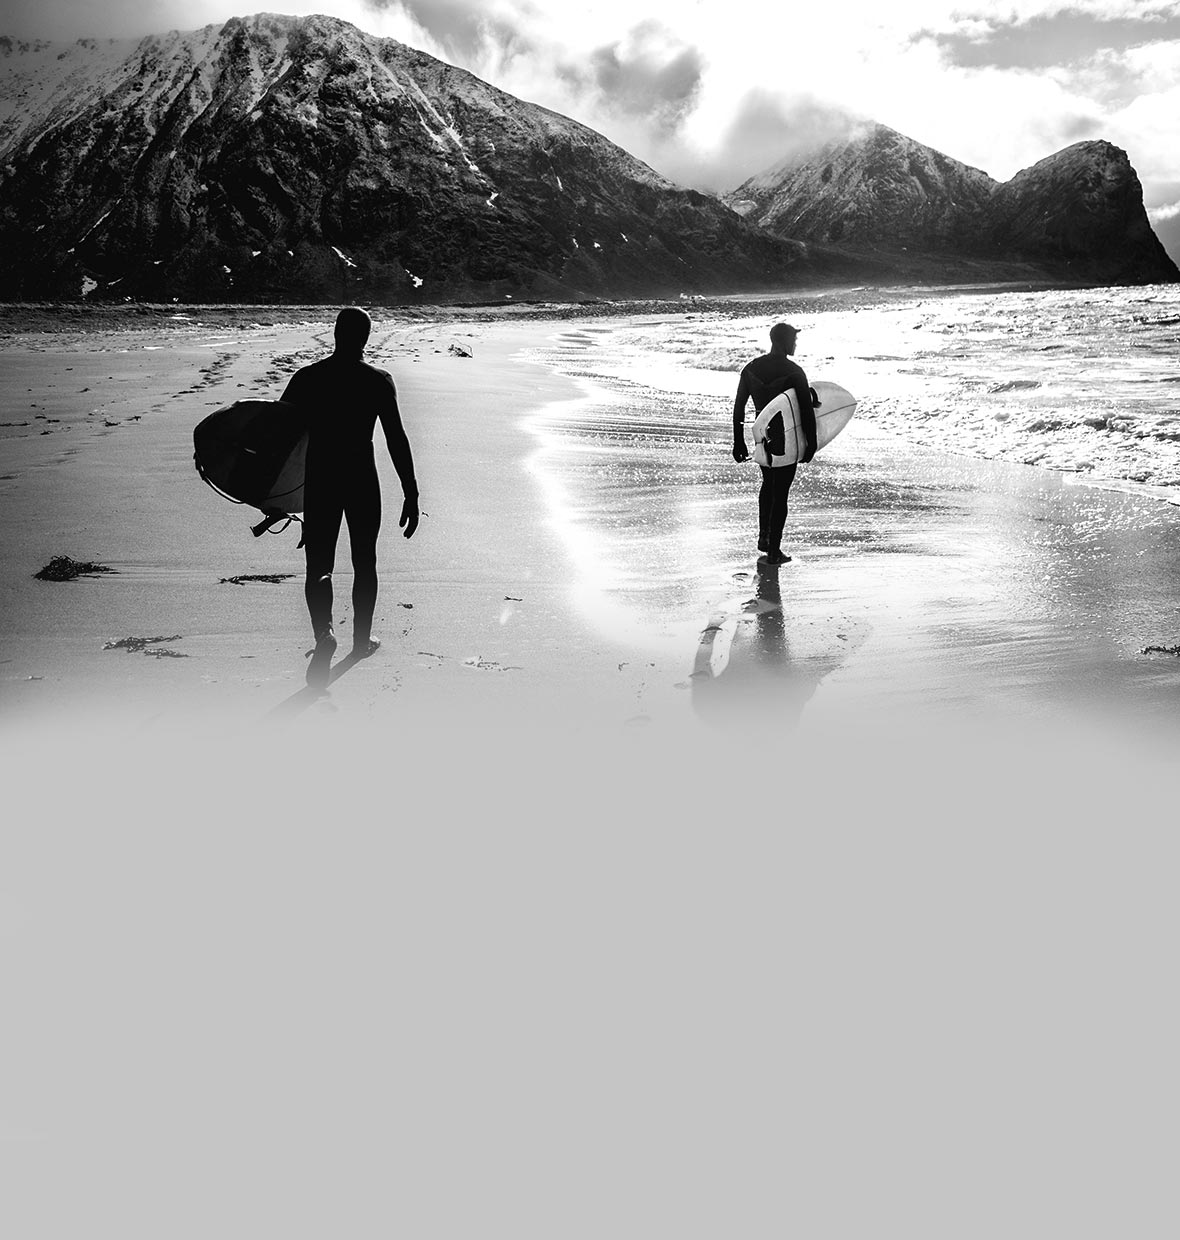 Surfers on beach